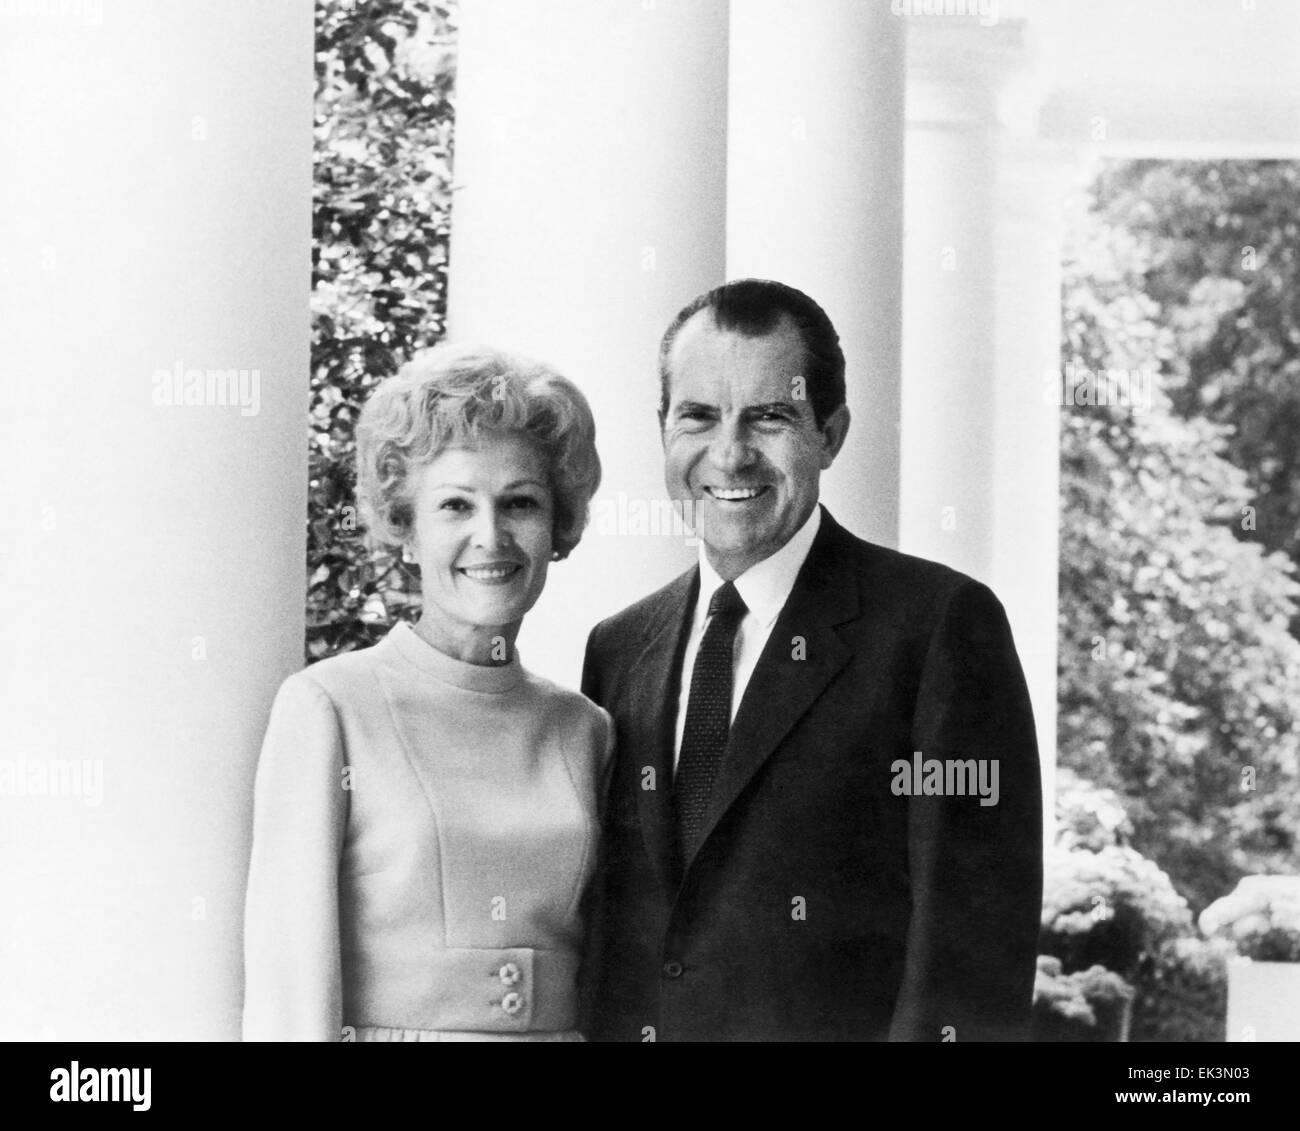 U.S. President Richard Nixon and his wife, Pat, Portrait at White House, Washington, DC, 1969 Stock Photo